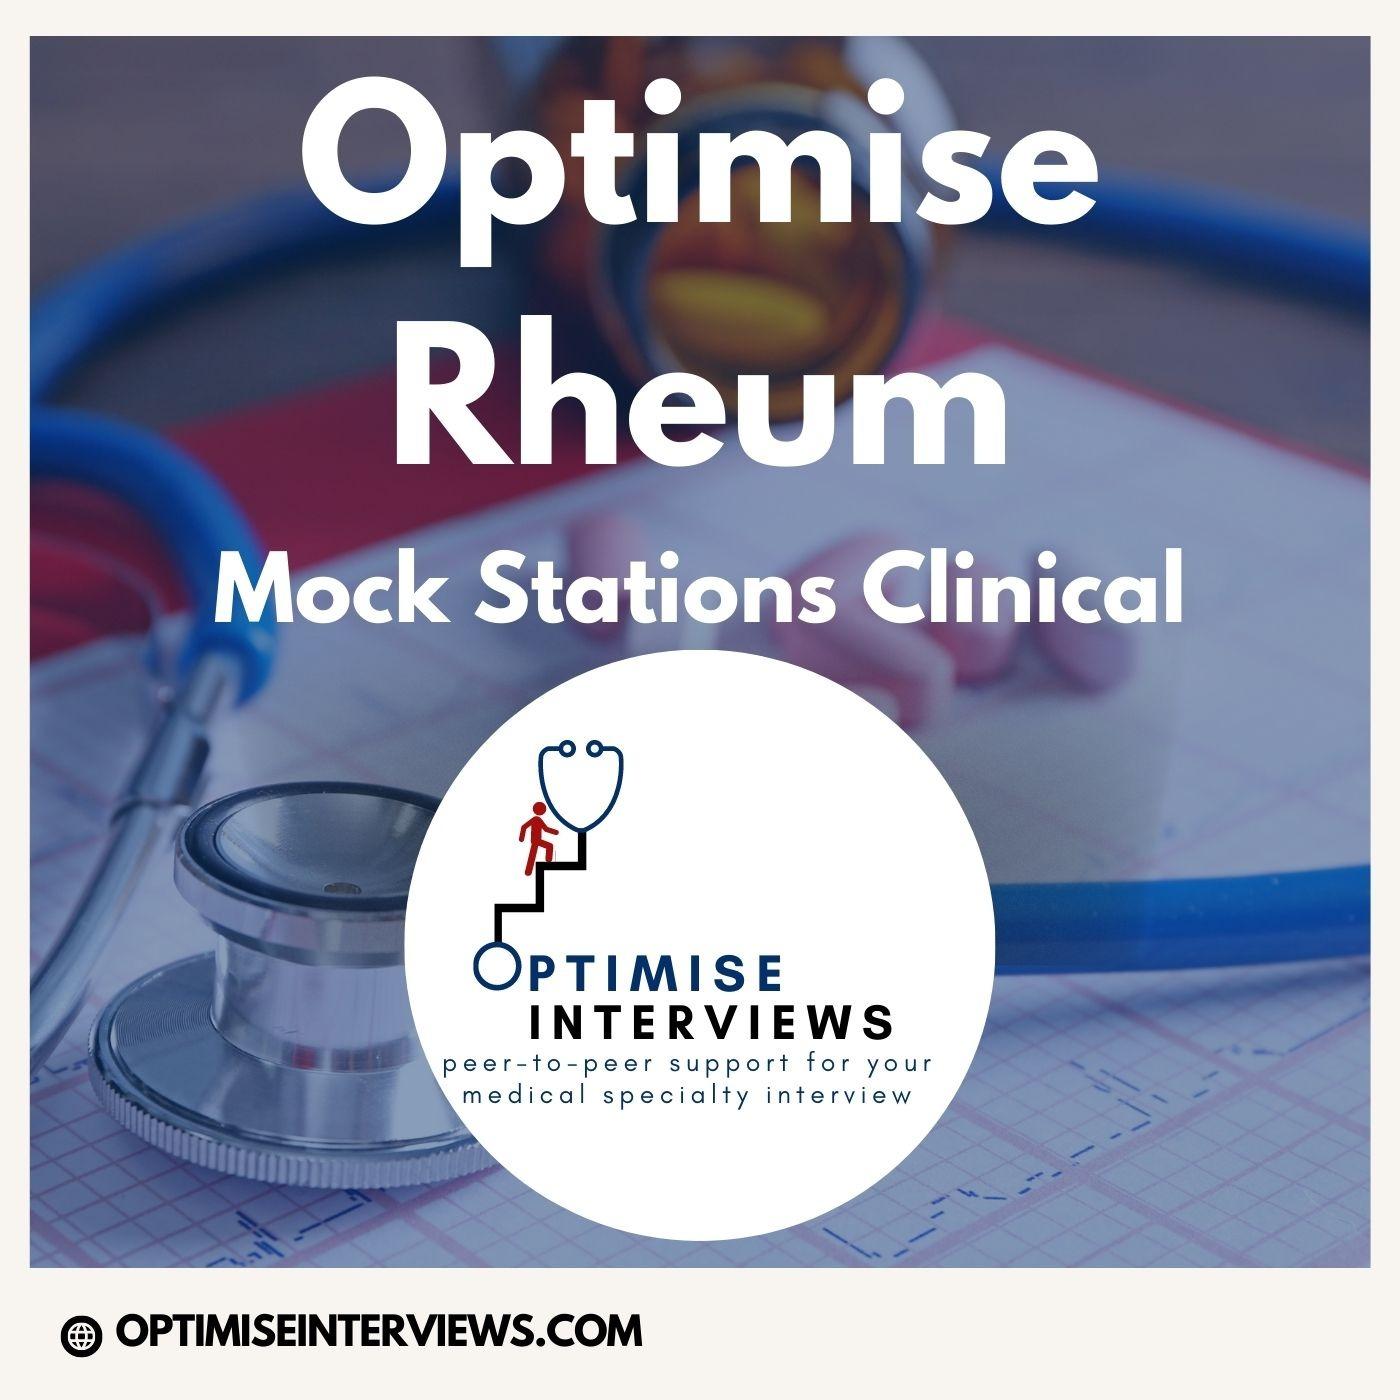 OptimiseRheum - Mock Stations Clinical